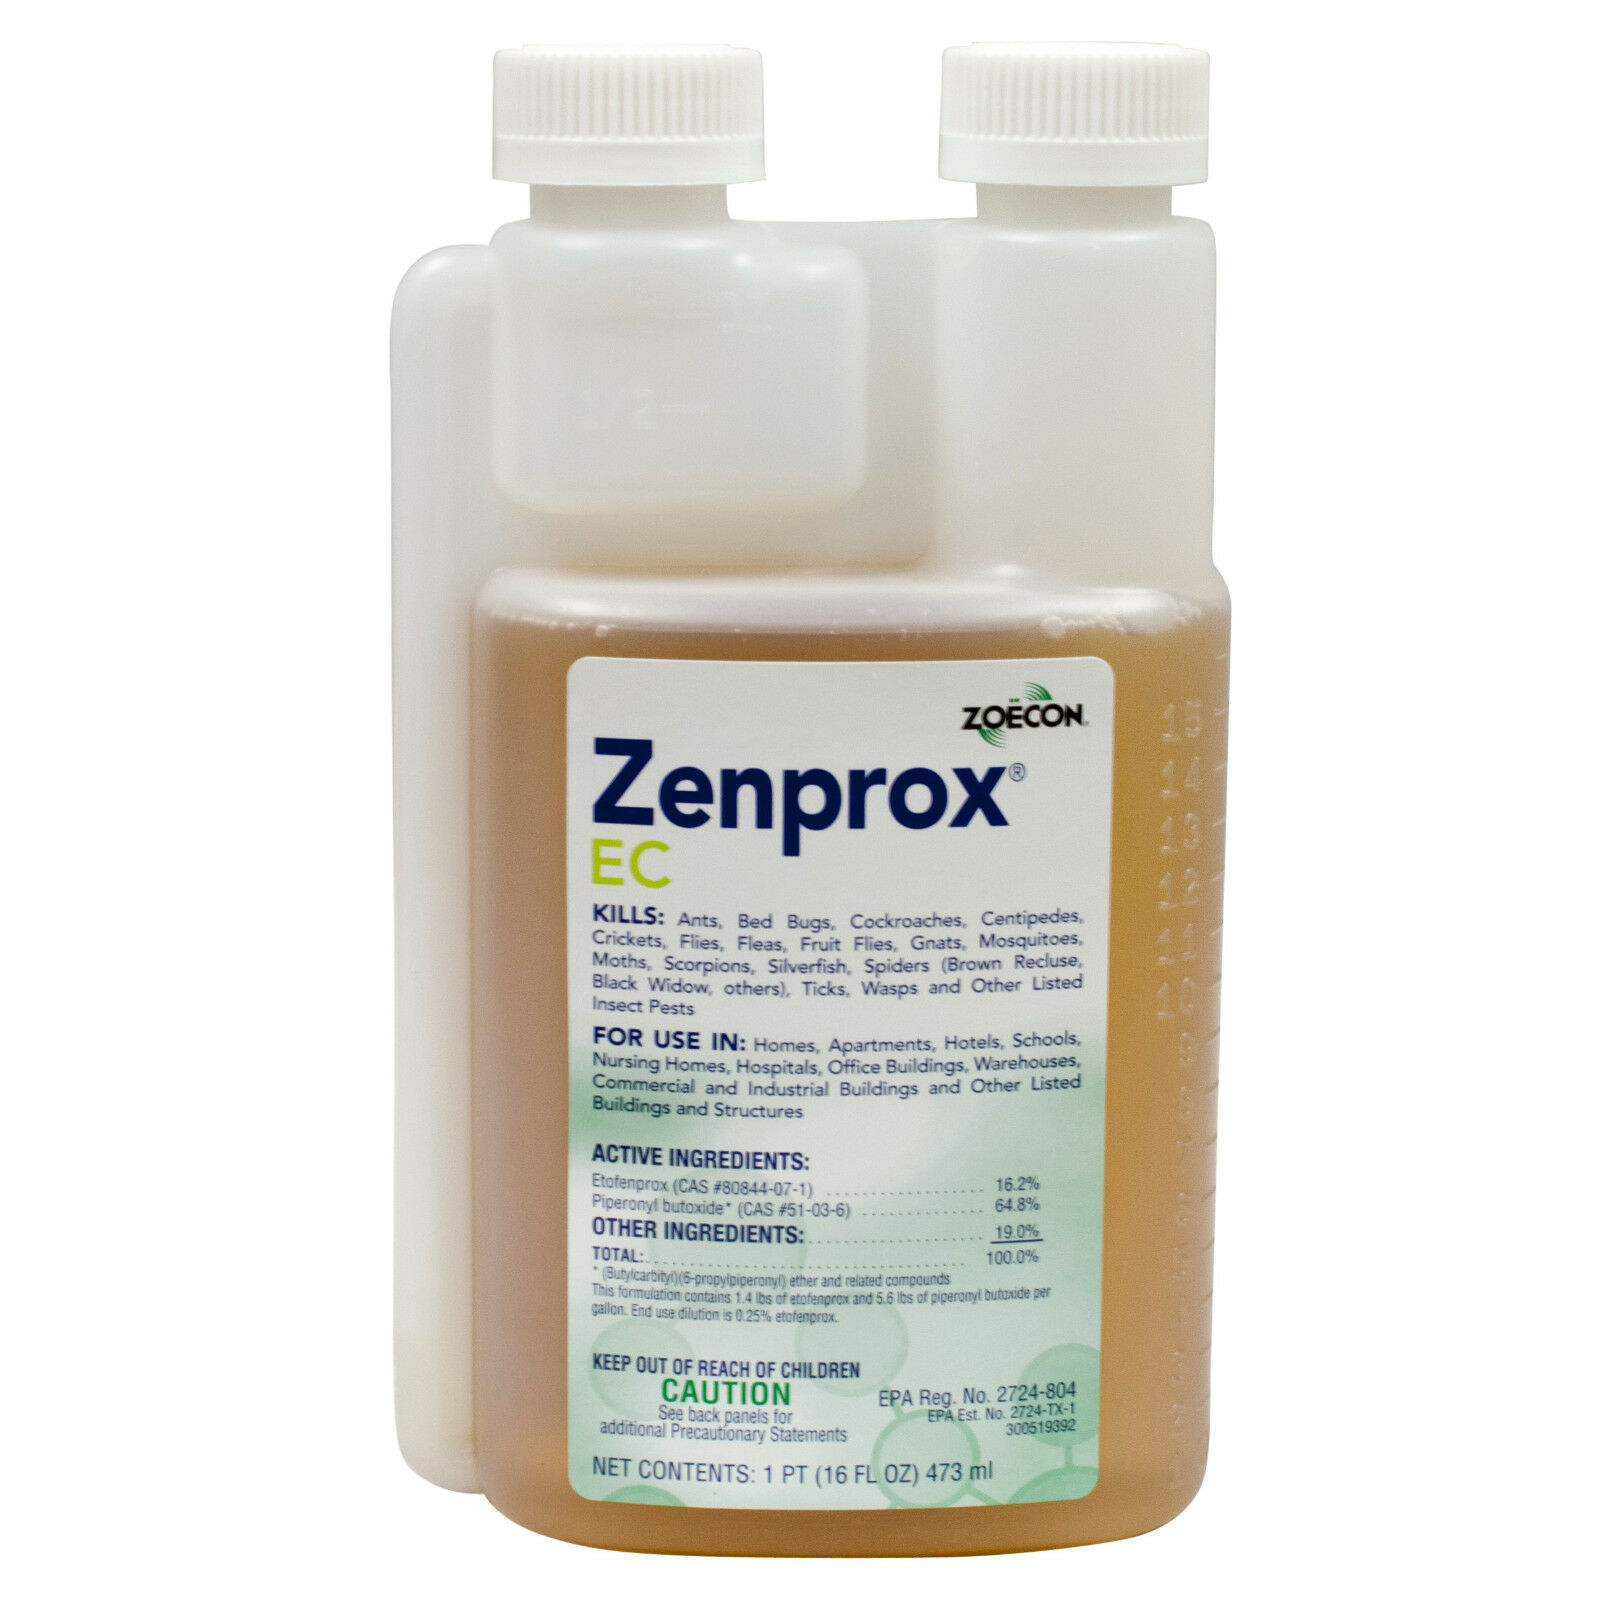 Zenprox Professional Bed Bug Spray Kills Adult +nymph Bedbugs Ships To New York